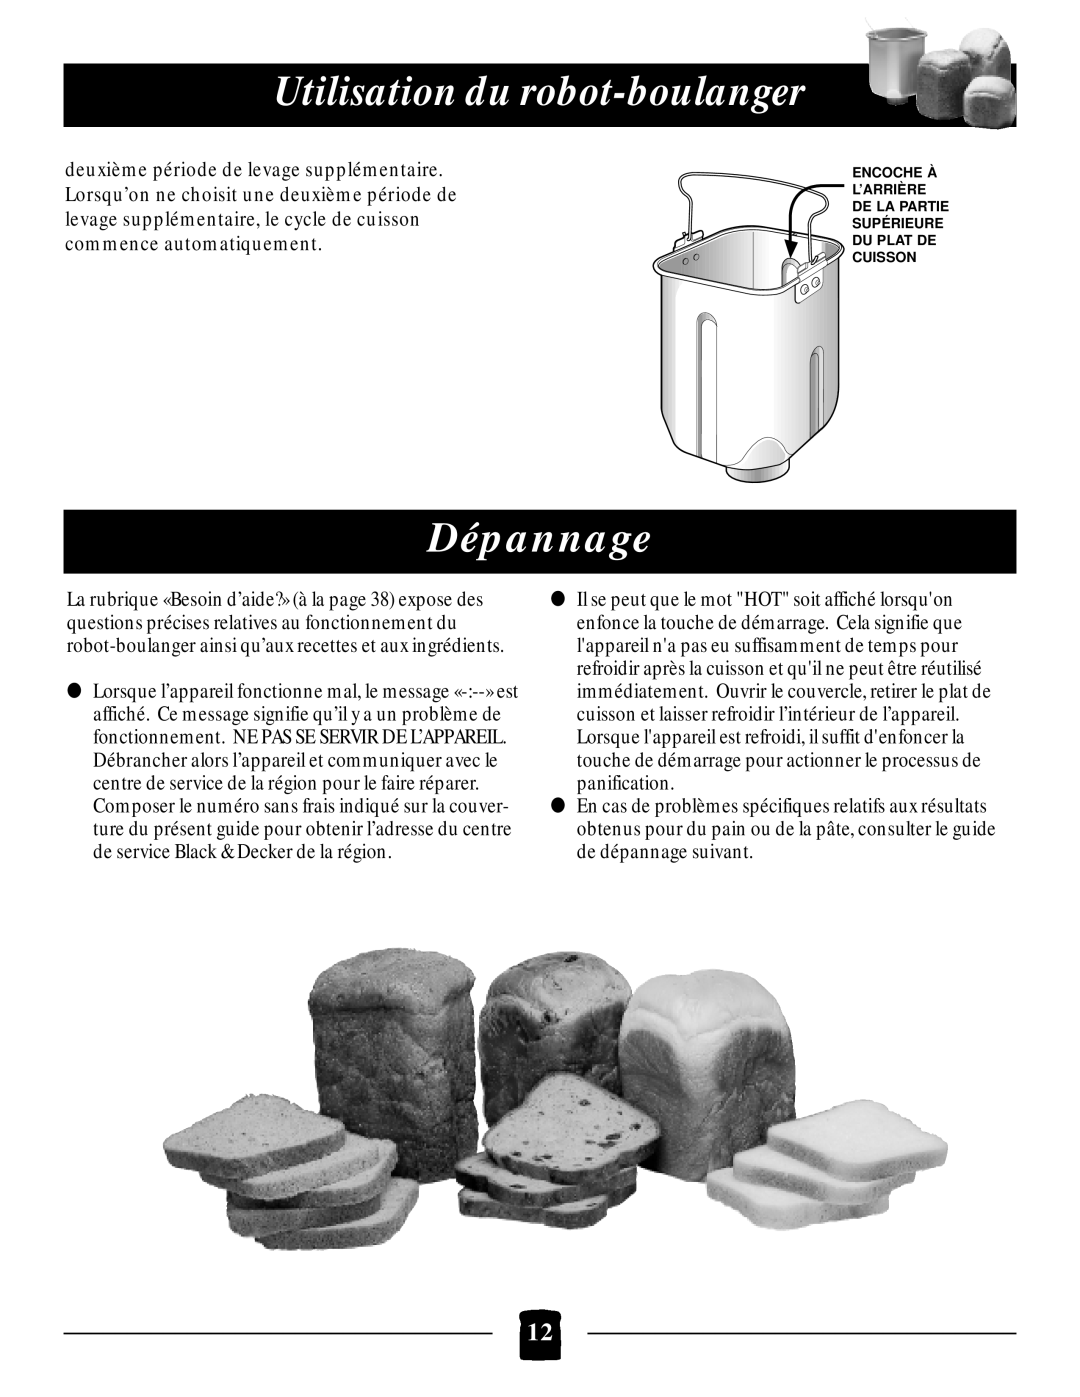 Black & Decker B1650 manual Dépannage, Utilisation du robot-boulanger 